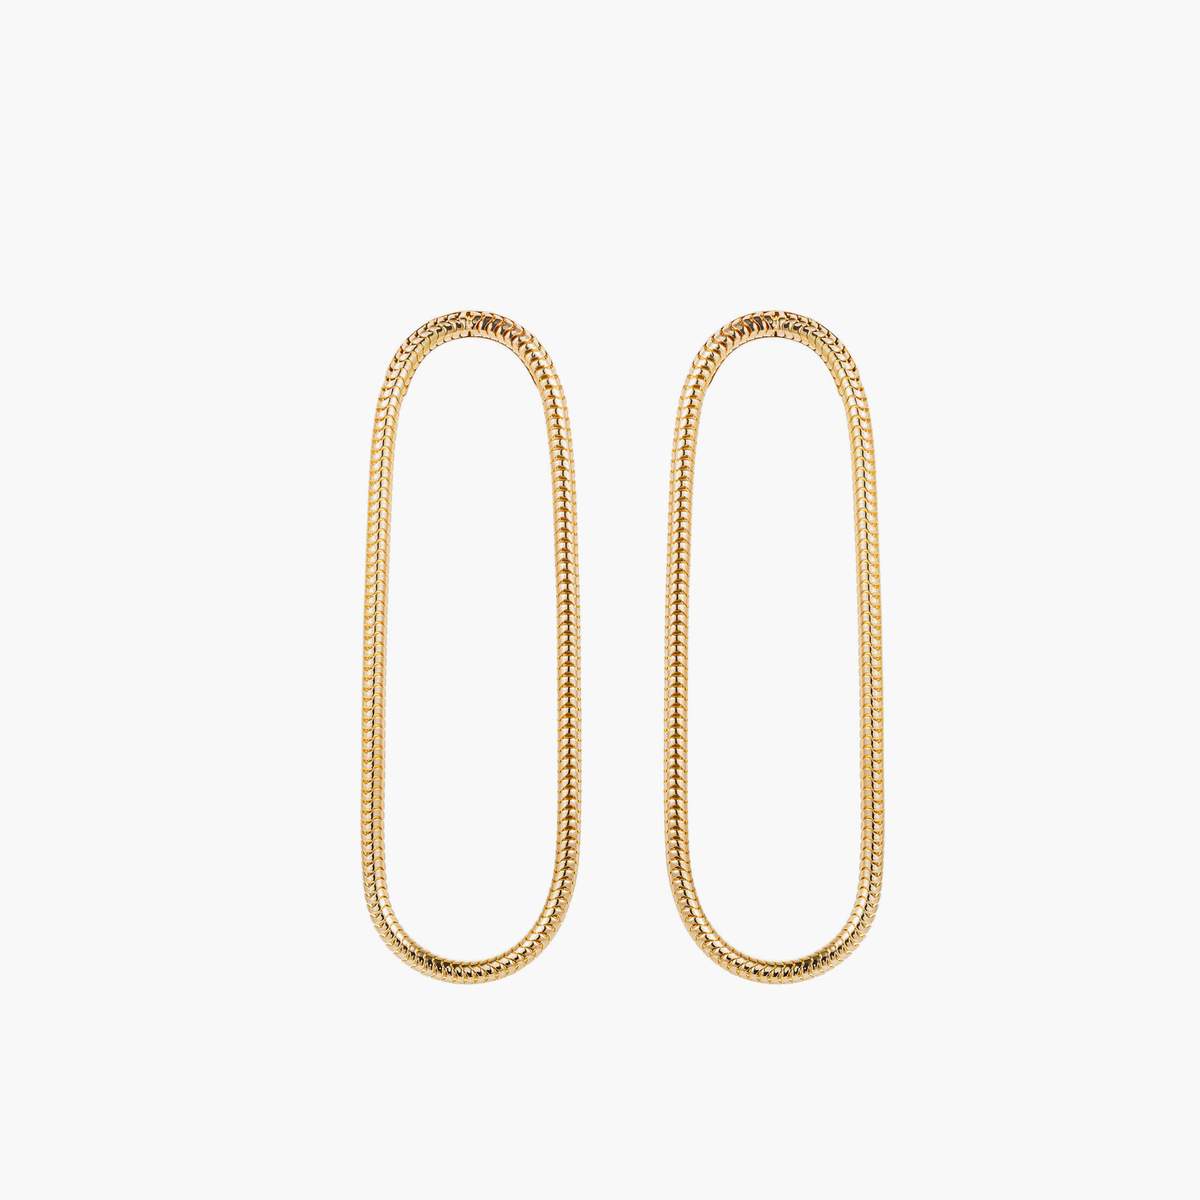 Single chain gold earring